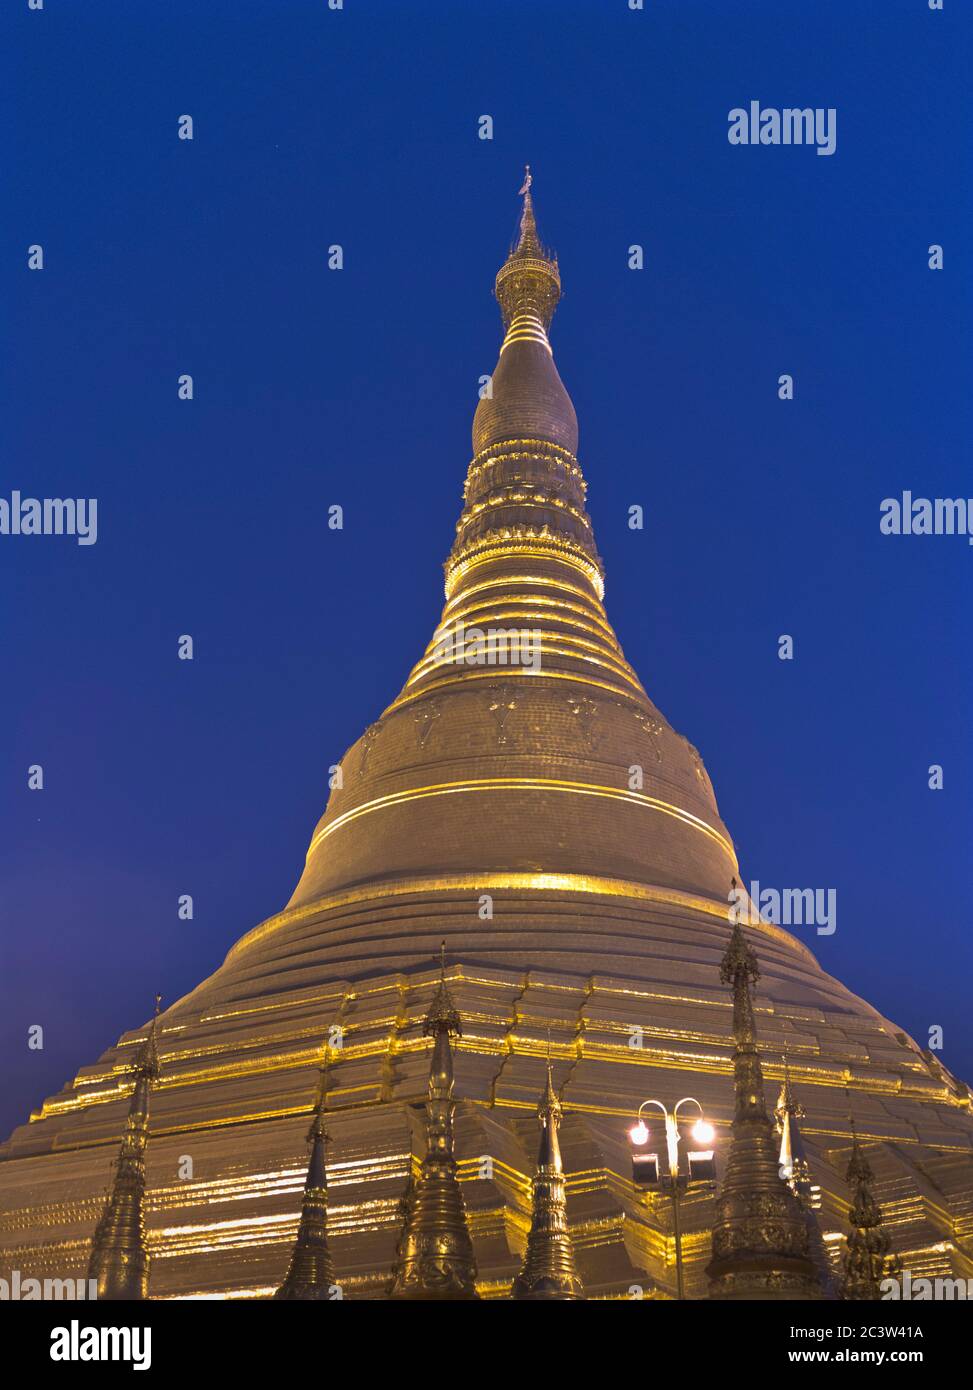 dh Shwedagon Pagoda tempio YANGON MYANMAR tempio buddista notte Grande Dagon Zedi Daw oro stupa foglia d'oro birmano sud-est asia Foto Stock